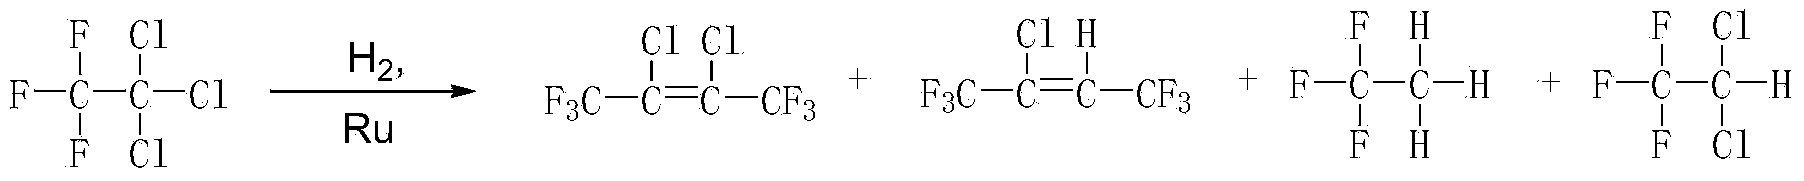 Preparation method for 2-chloro-1,1,1,4,4,4-hexafluoro-2-butene